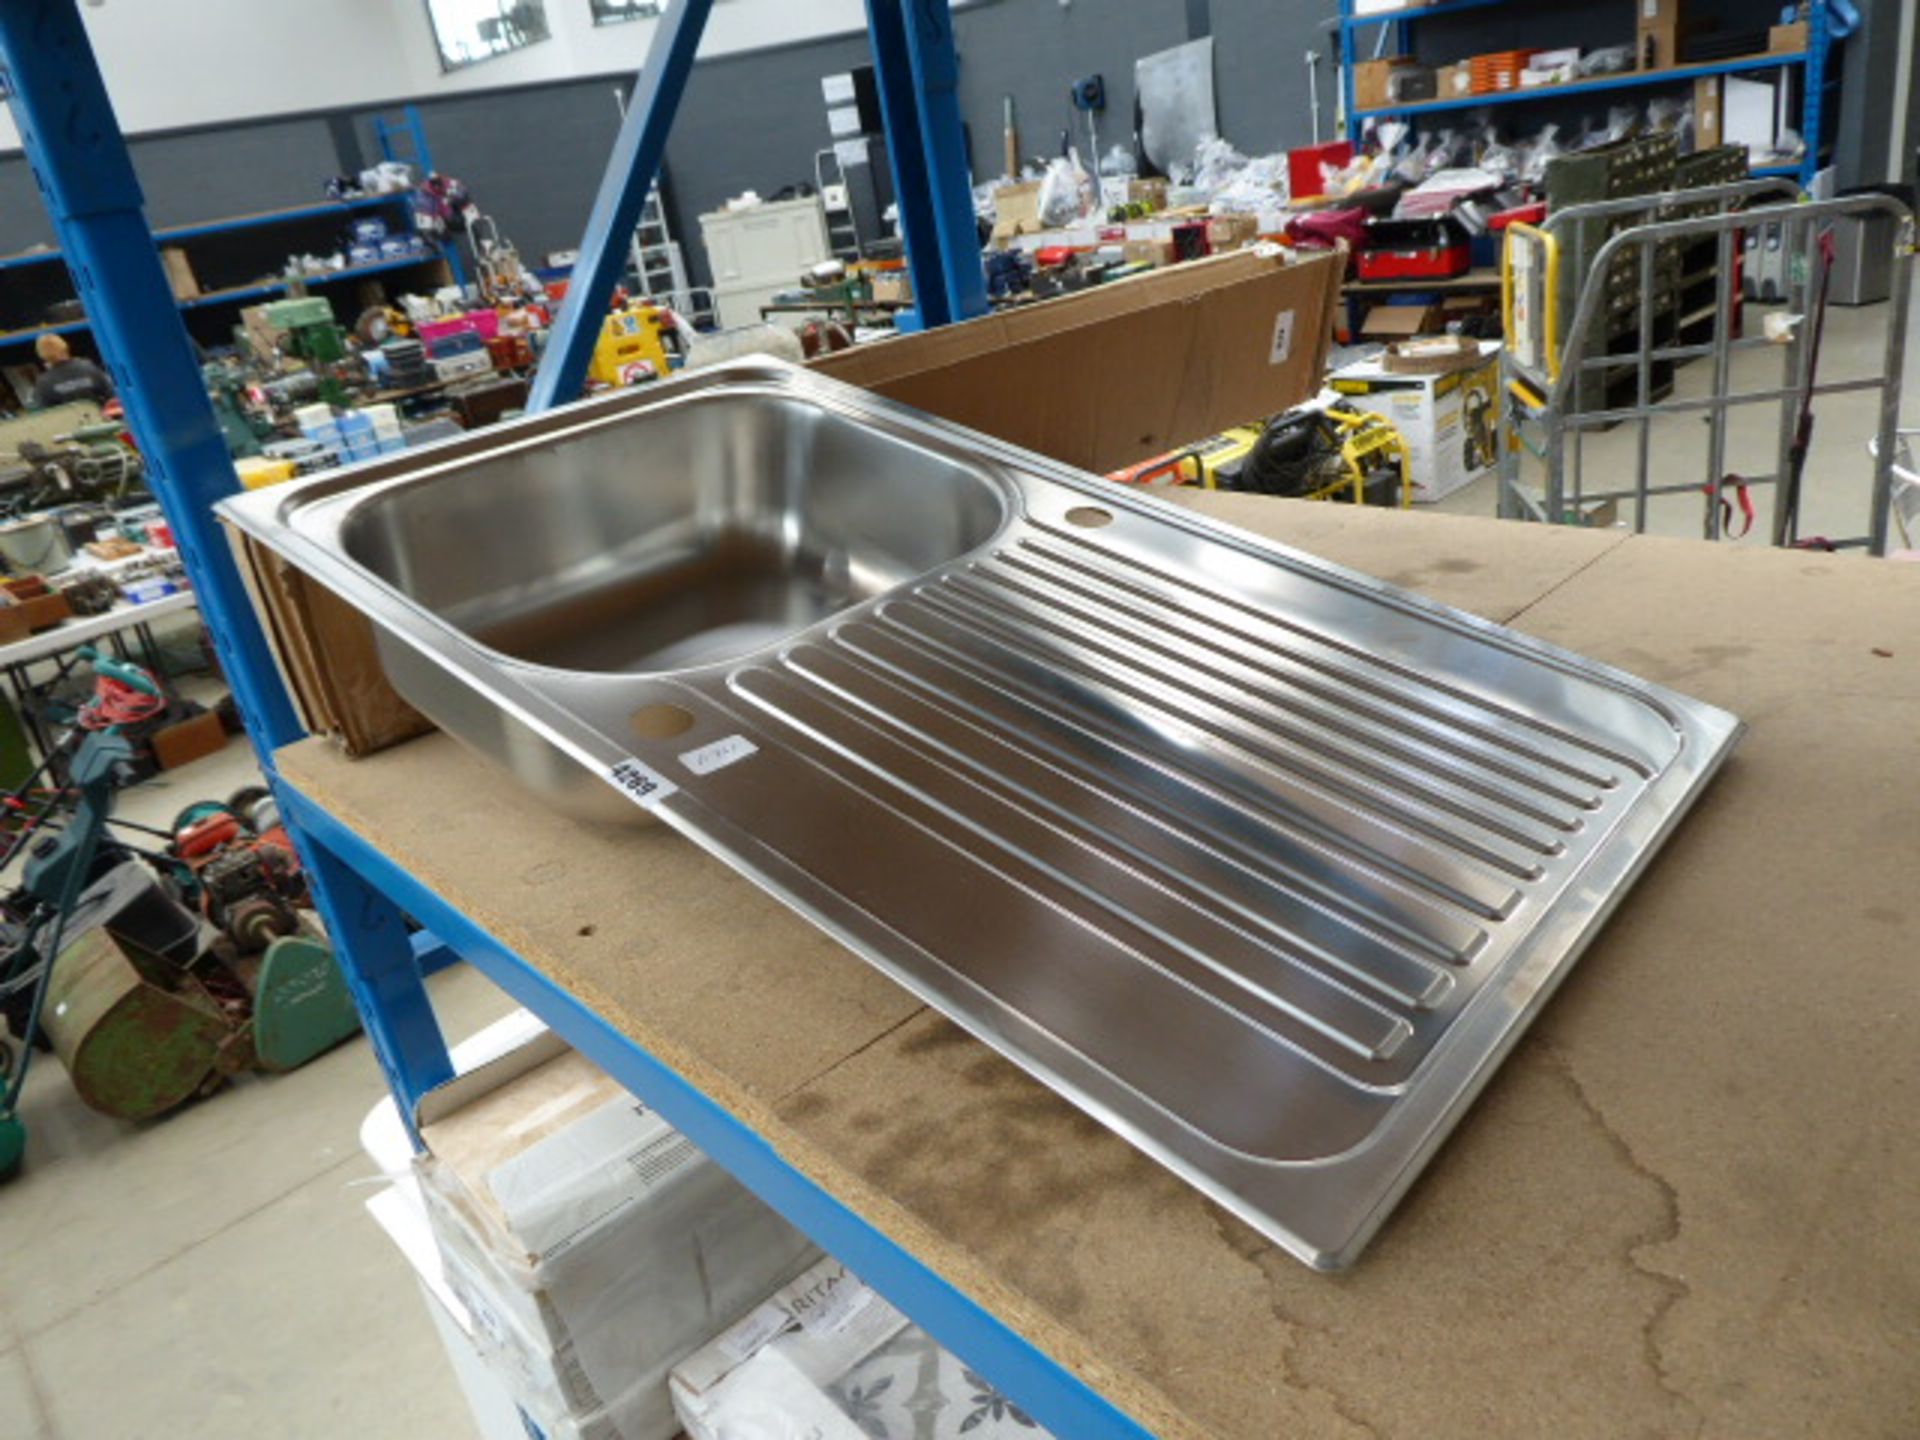 Single bowl stainless steel sink